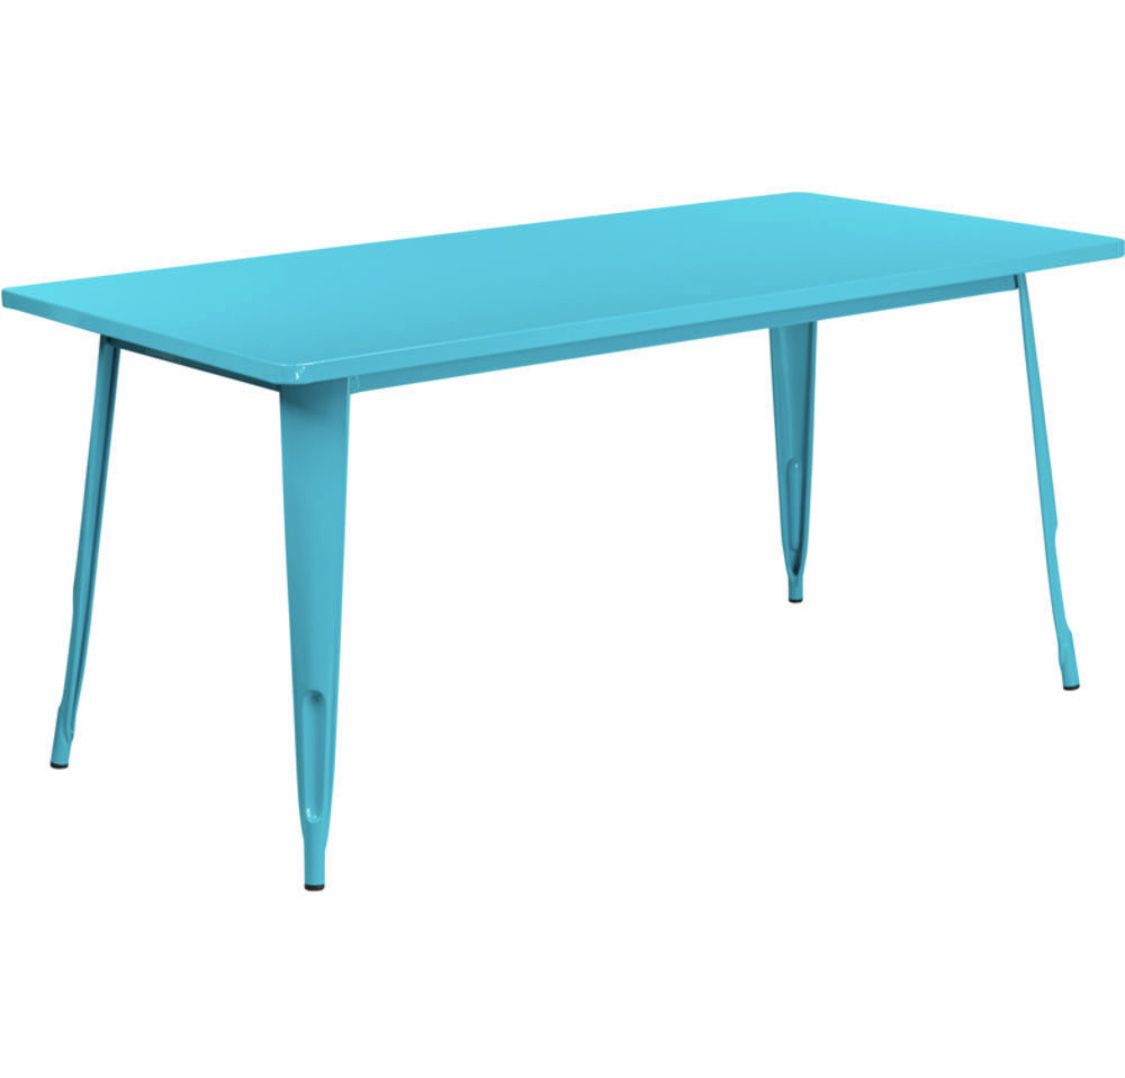 Flash Furniture 31.5'' x 63'' Rectangular Crystal Teal-Blue Metal Indoor-Outdoor Table [ET-CT005-CB-GG]